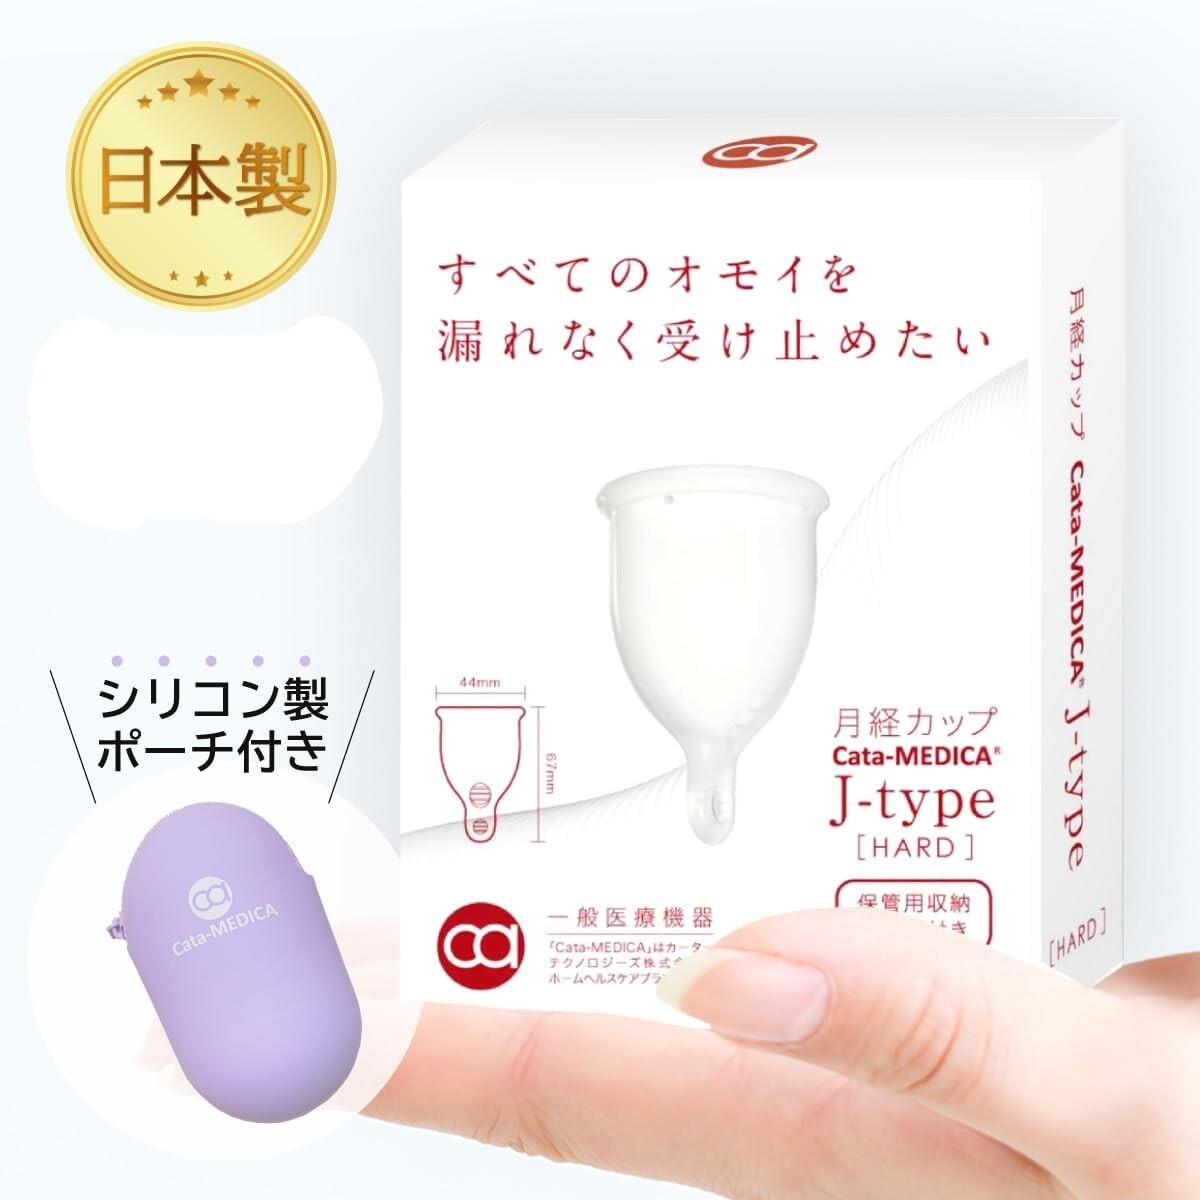 Cata-MEDICA 月経カップ 日本製 医療機器 Menstrual cup 生理用品 柔らかい 初心者向け (HARD) 